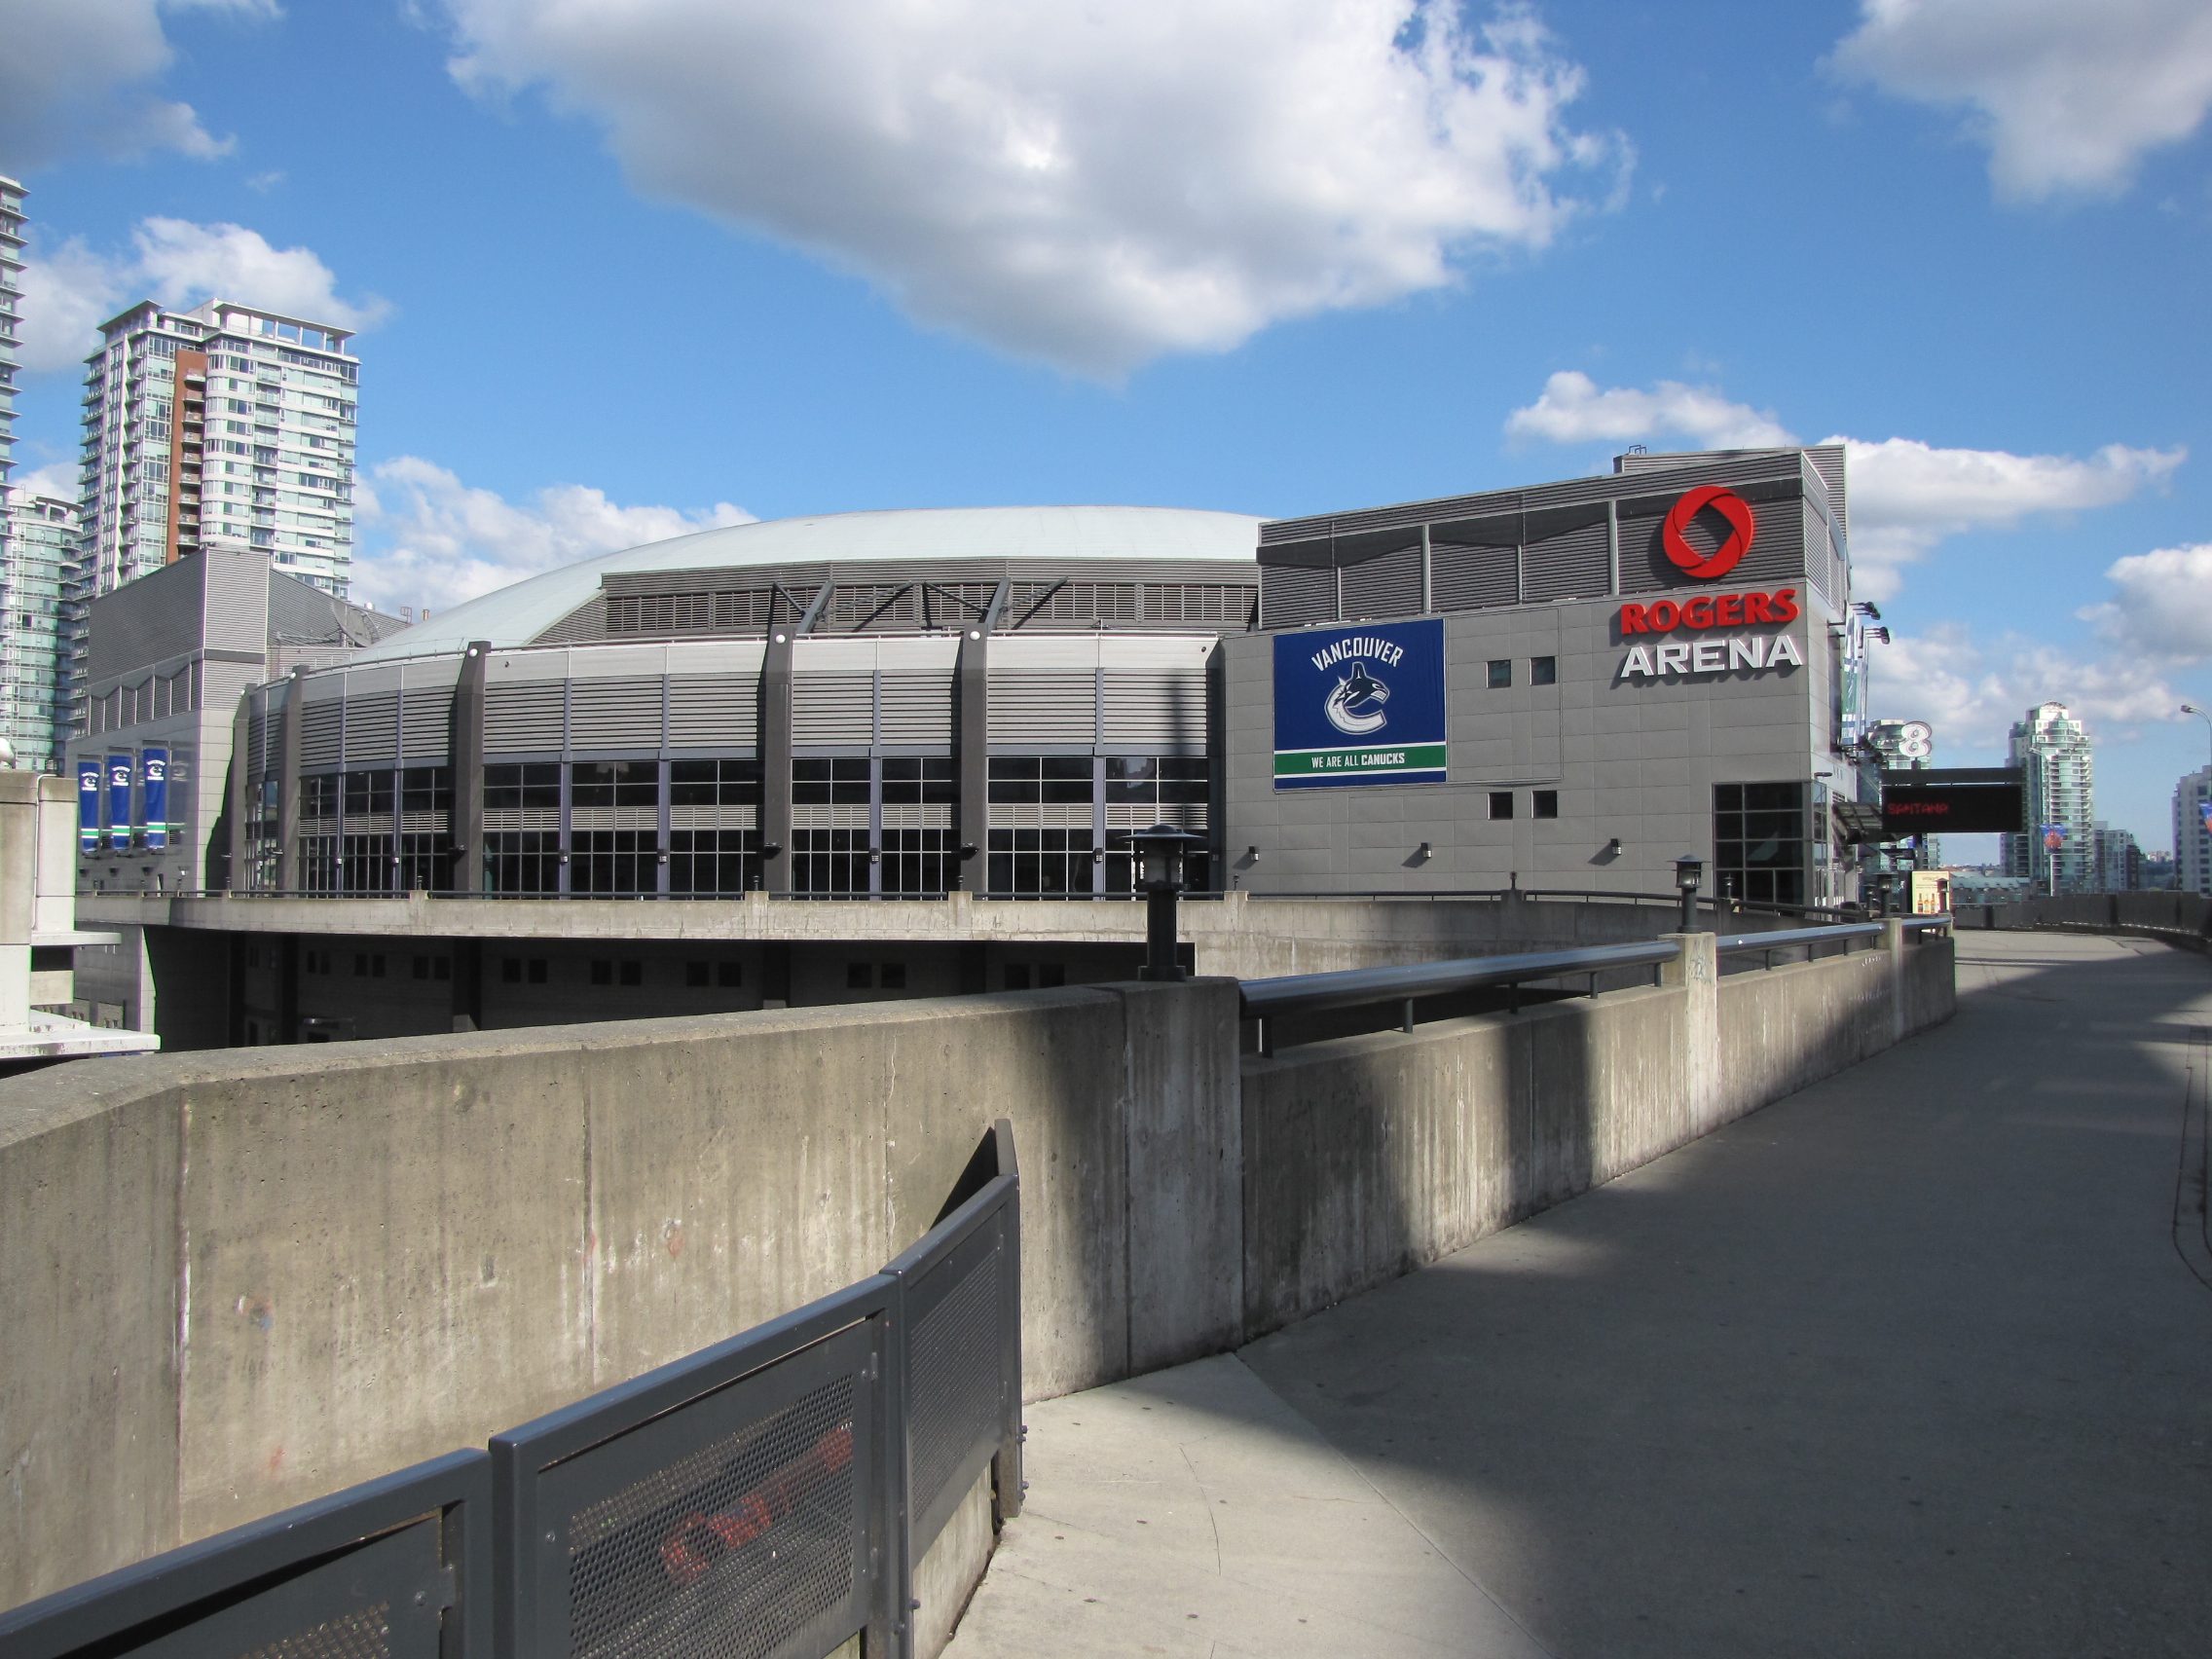 Rogers Arena 2021 show schedule & venue information Live Nation